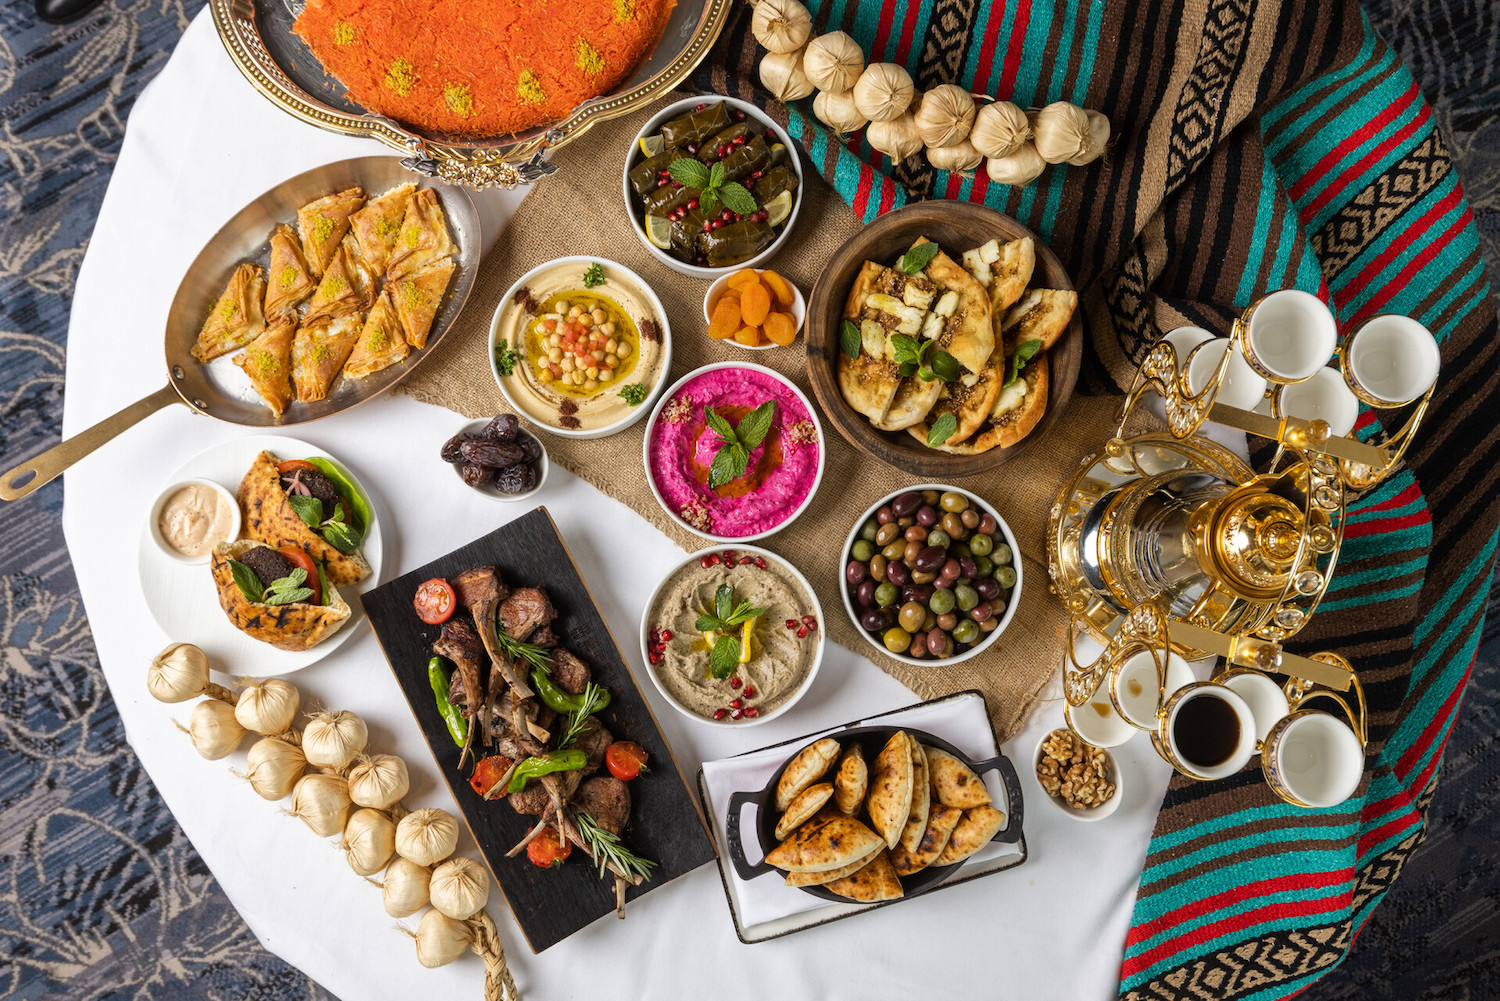 Spread of Mediterranean food on a table